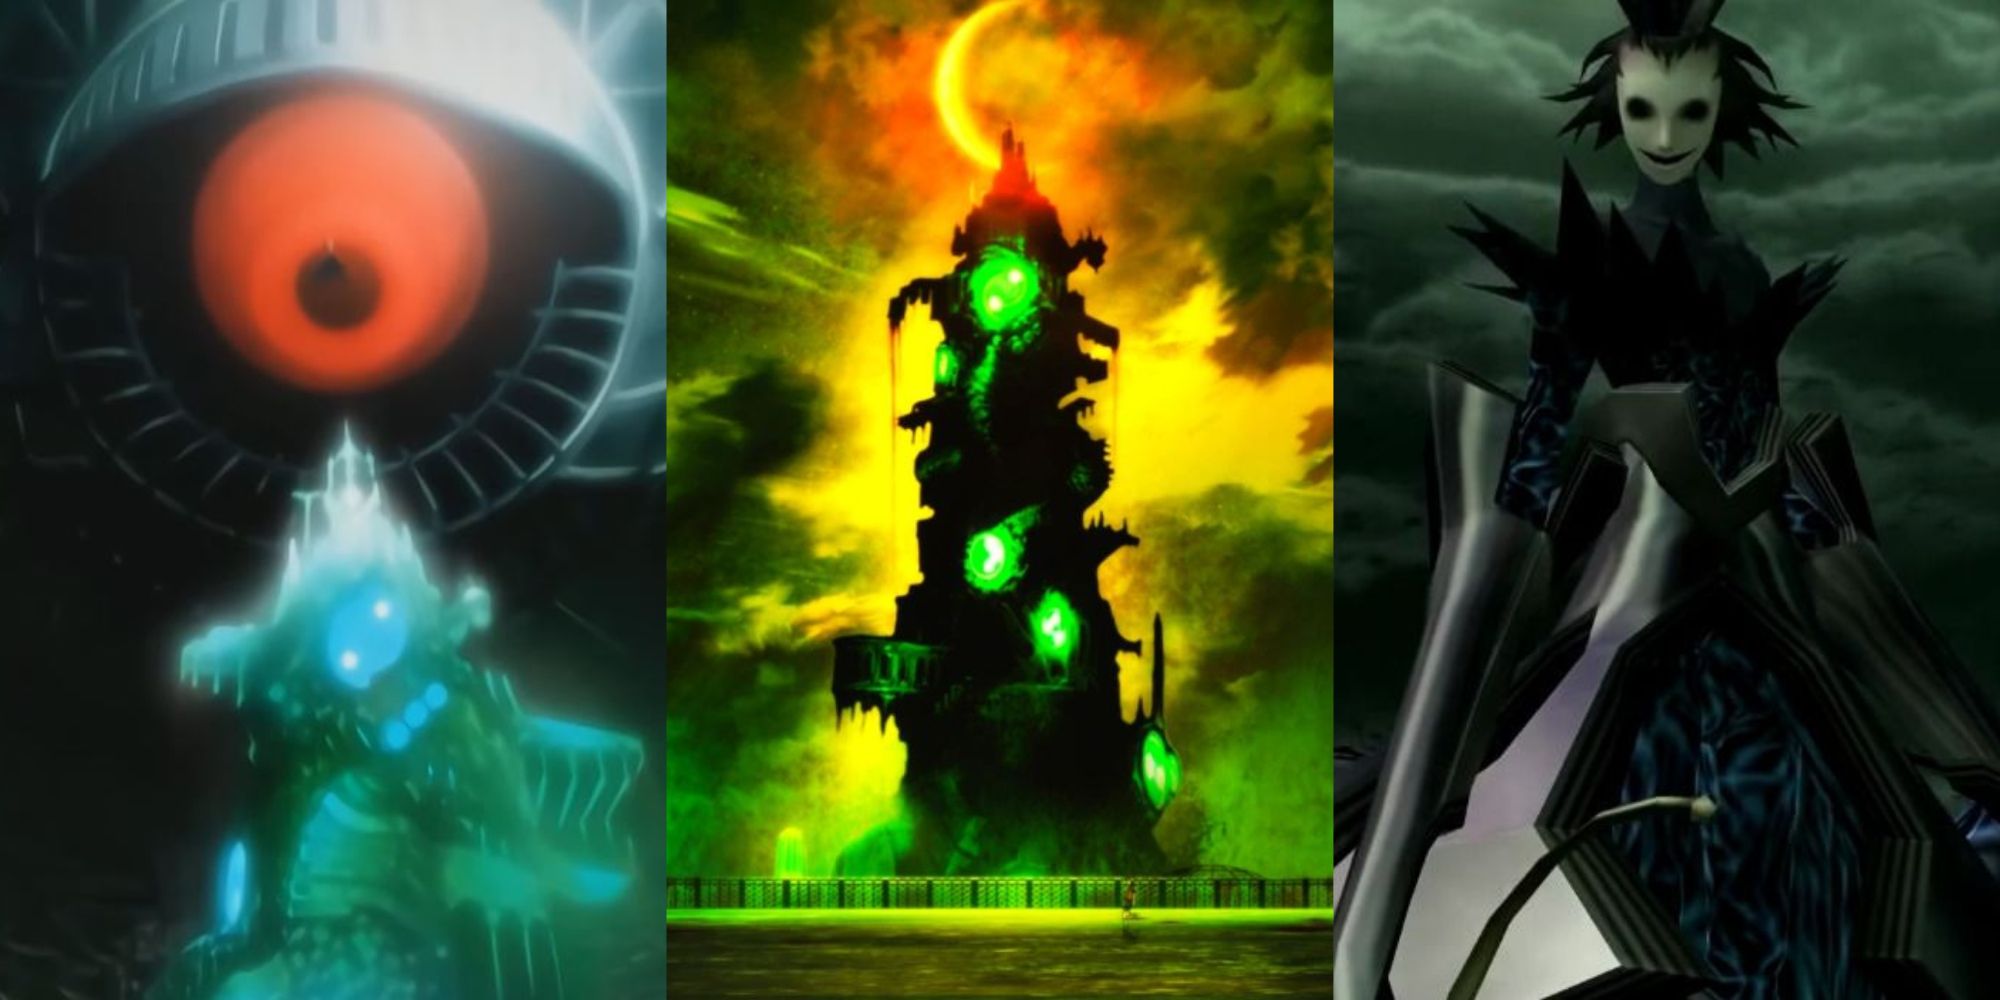 Nyx, Tartarus, and the Nyx Avatar in Persona 3